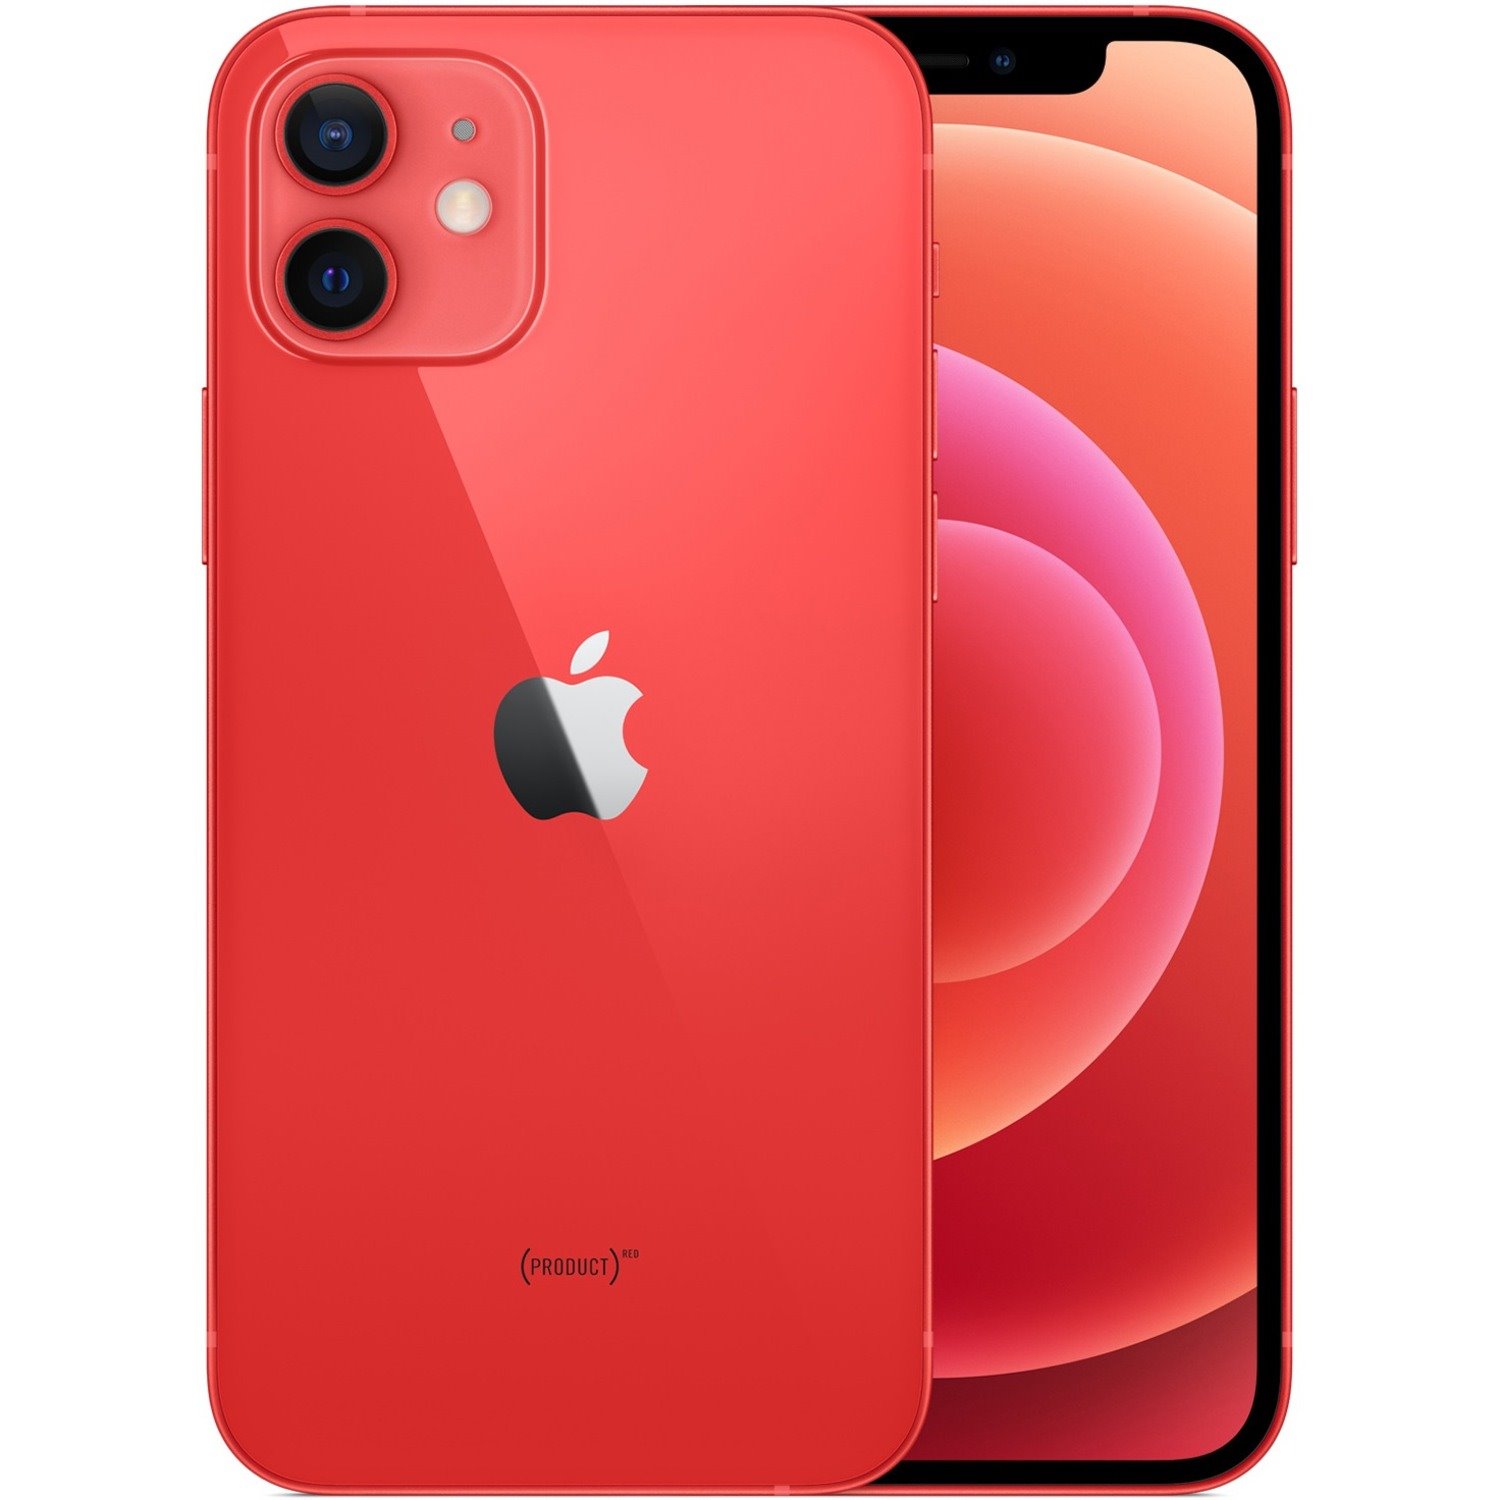 Apple iPhone 12 mini 64 GB Smartphone - 13.7 cm (5.4") OLED Full HD Plus 2340 x 1080 - Hexa-core (6 Core) - iOS 14 - 5G - Red